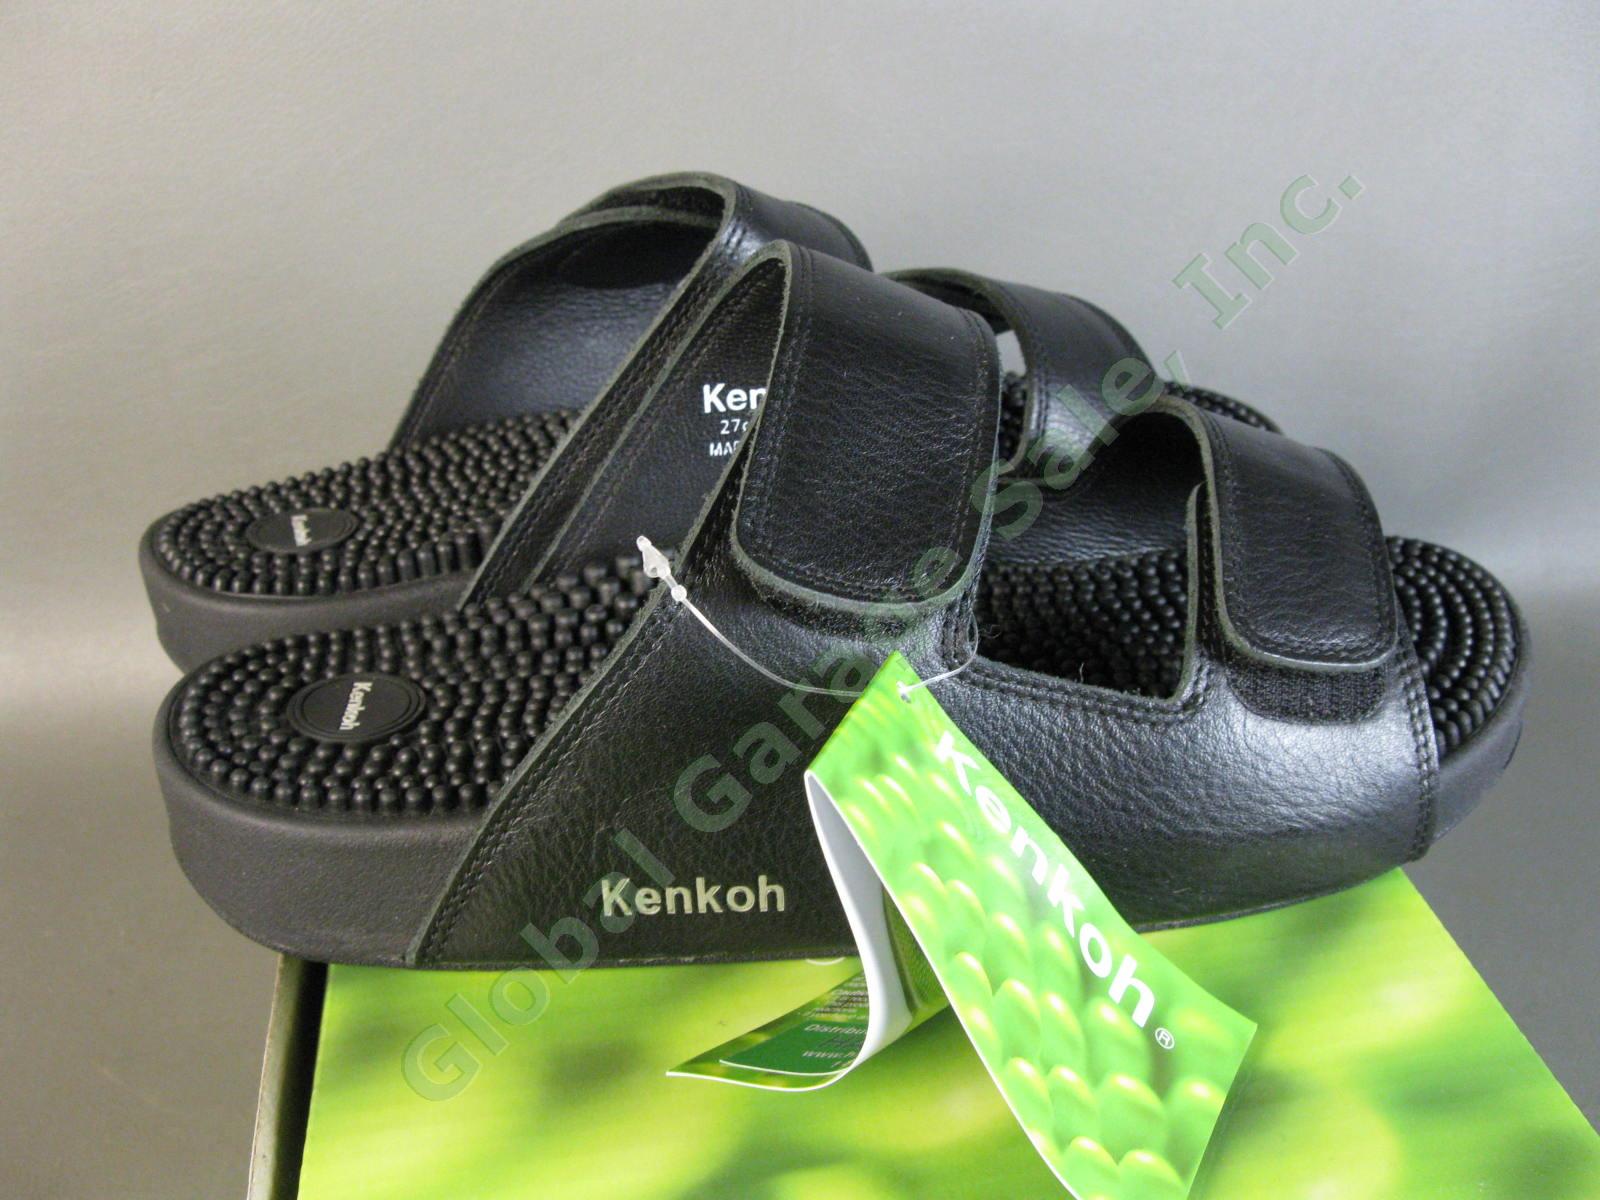 Kenkoh Serenity Japanese Massage Reflexology Sandals Unisex US M8.5 W10 EU41 UK8 5